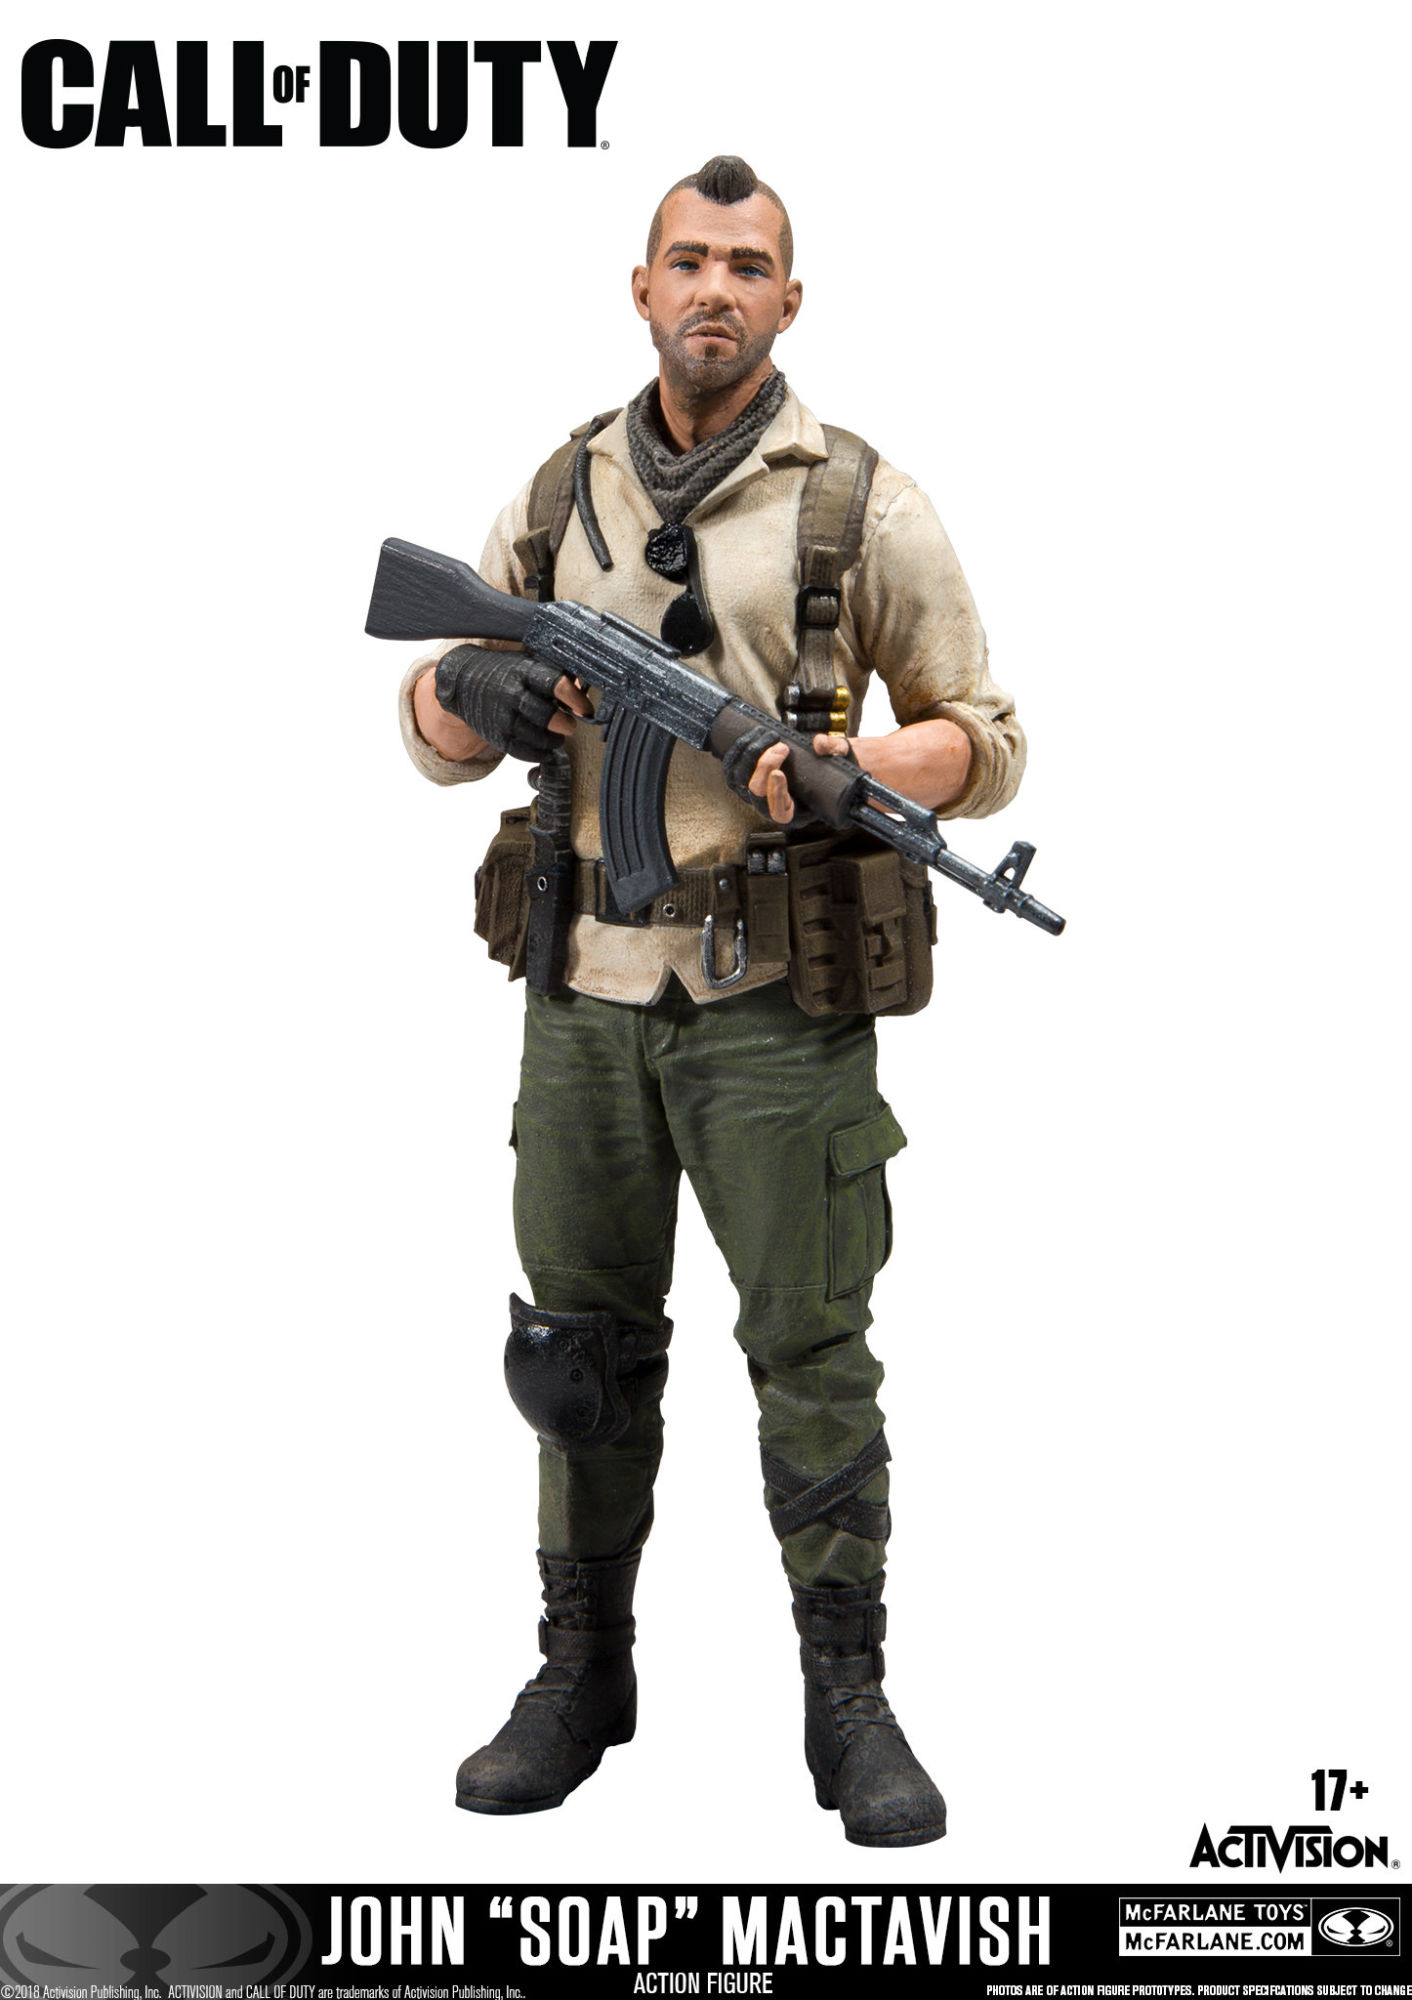 Call of Duty - Simon Ghost Riley Winter Variant Action Figure - The  Toyark - News